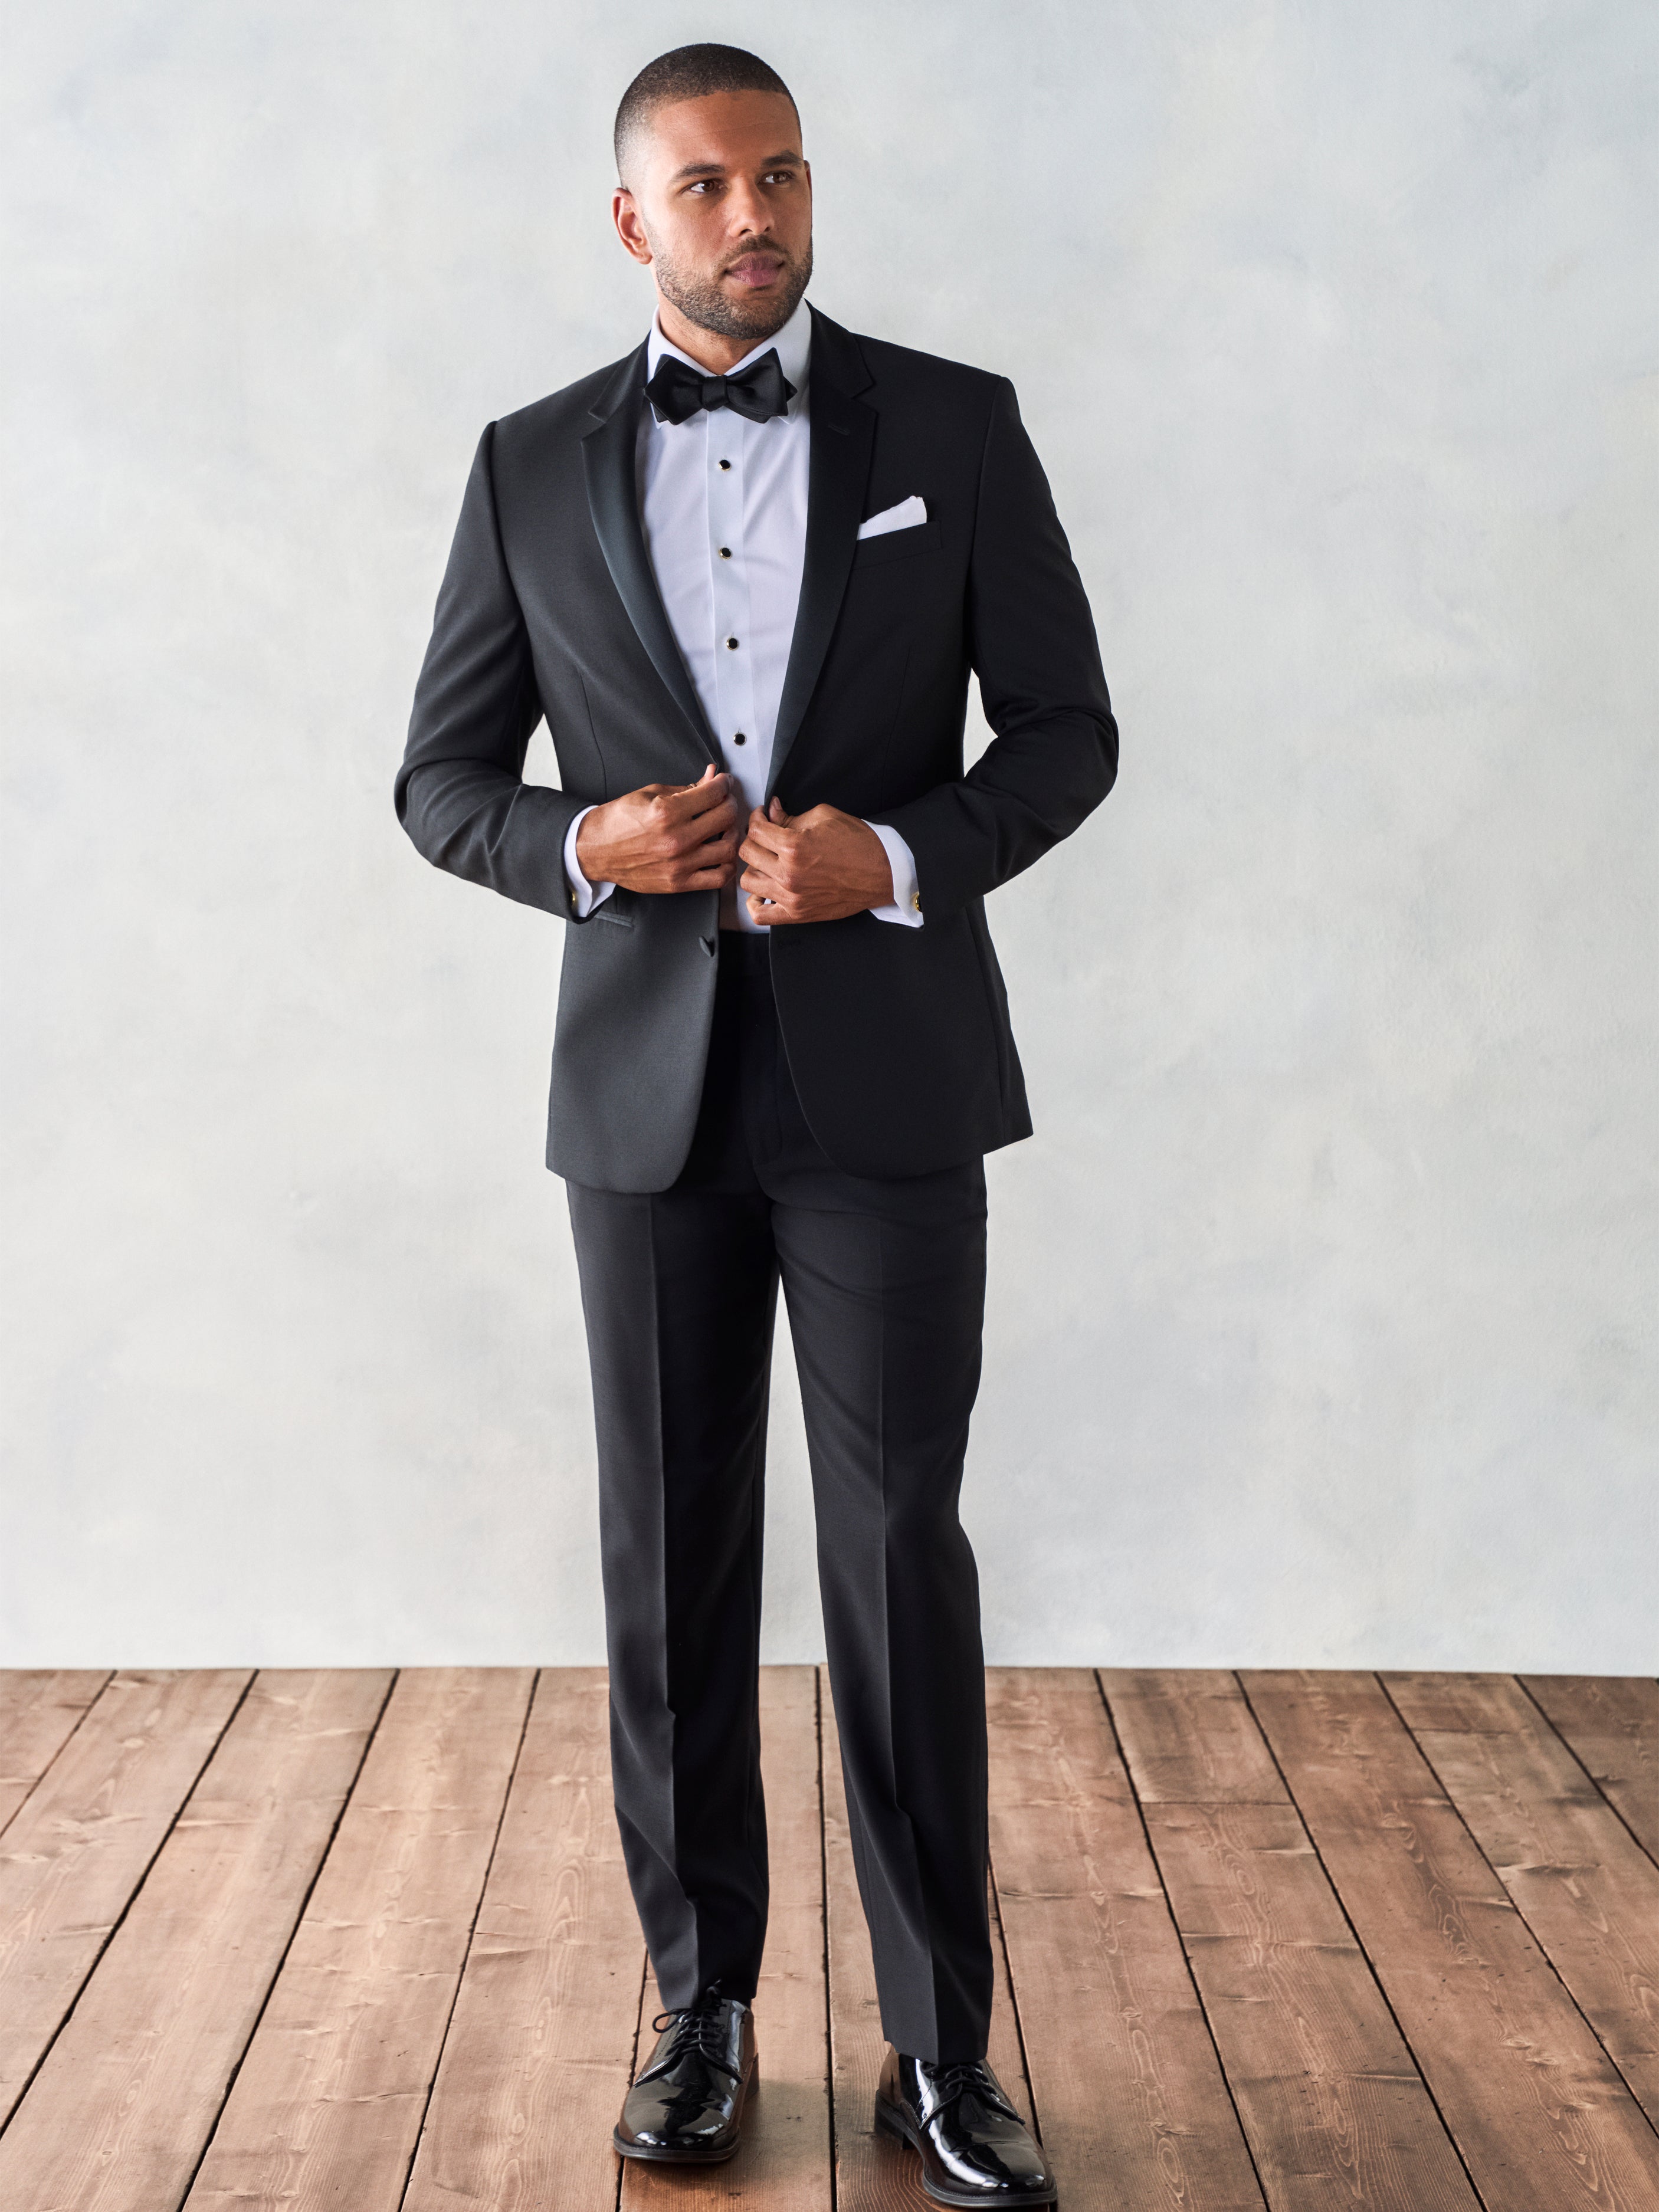 Boys Wedding Suits w/ a colored slim bow tie - Black N Bianco